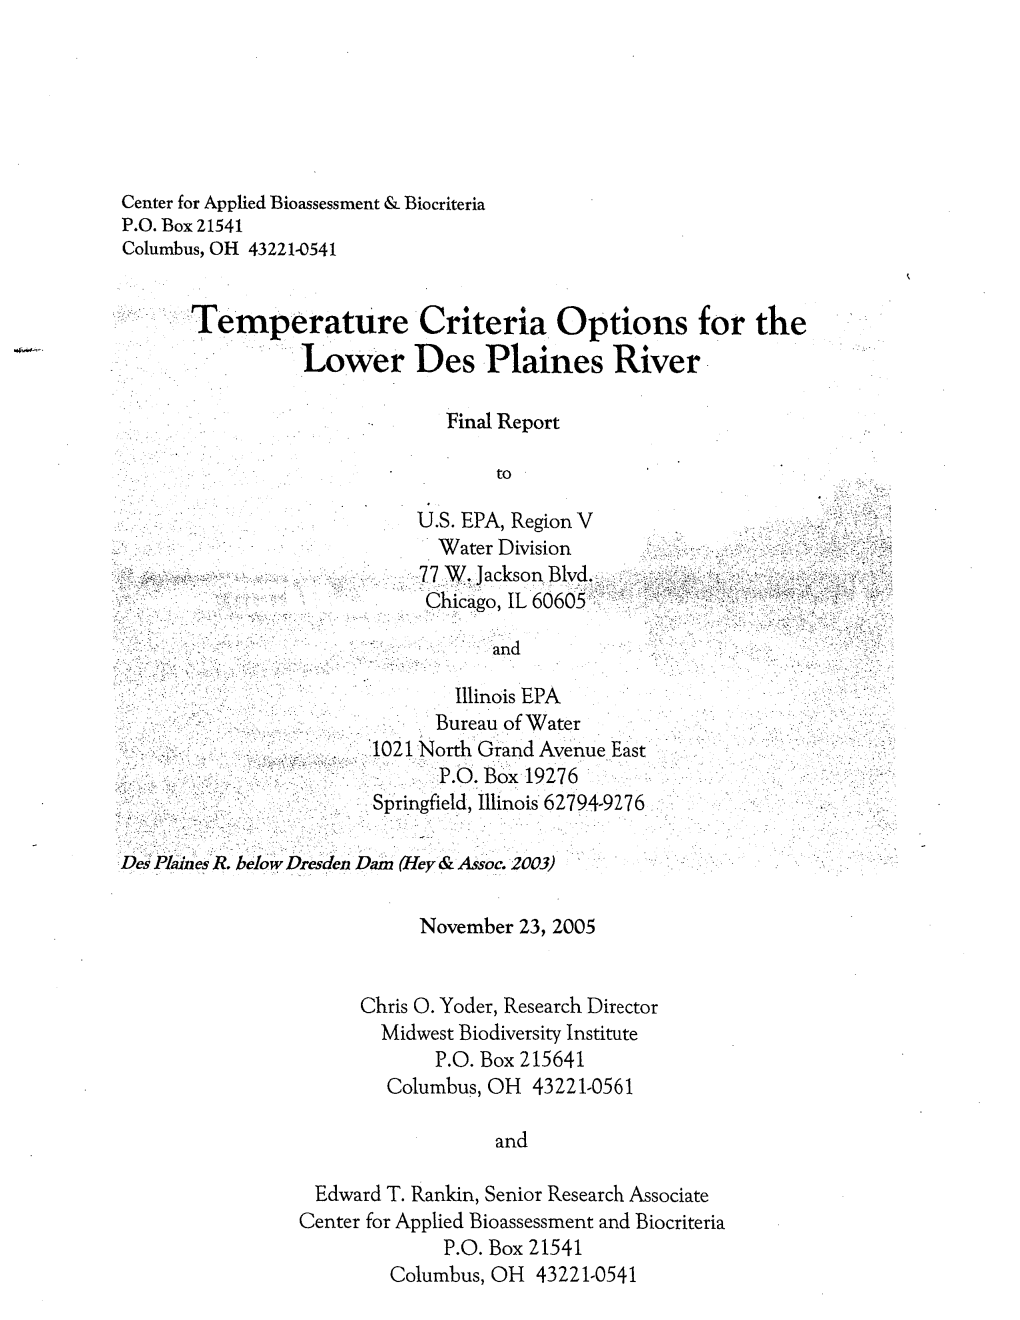 Temperature Criteria Options for the Lower Des Plaines River